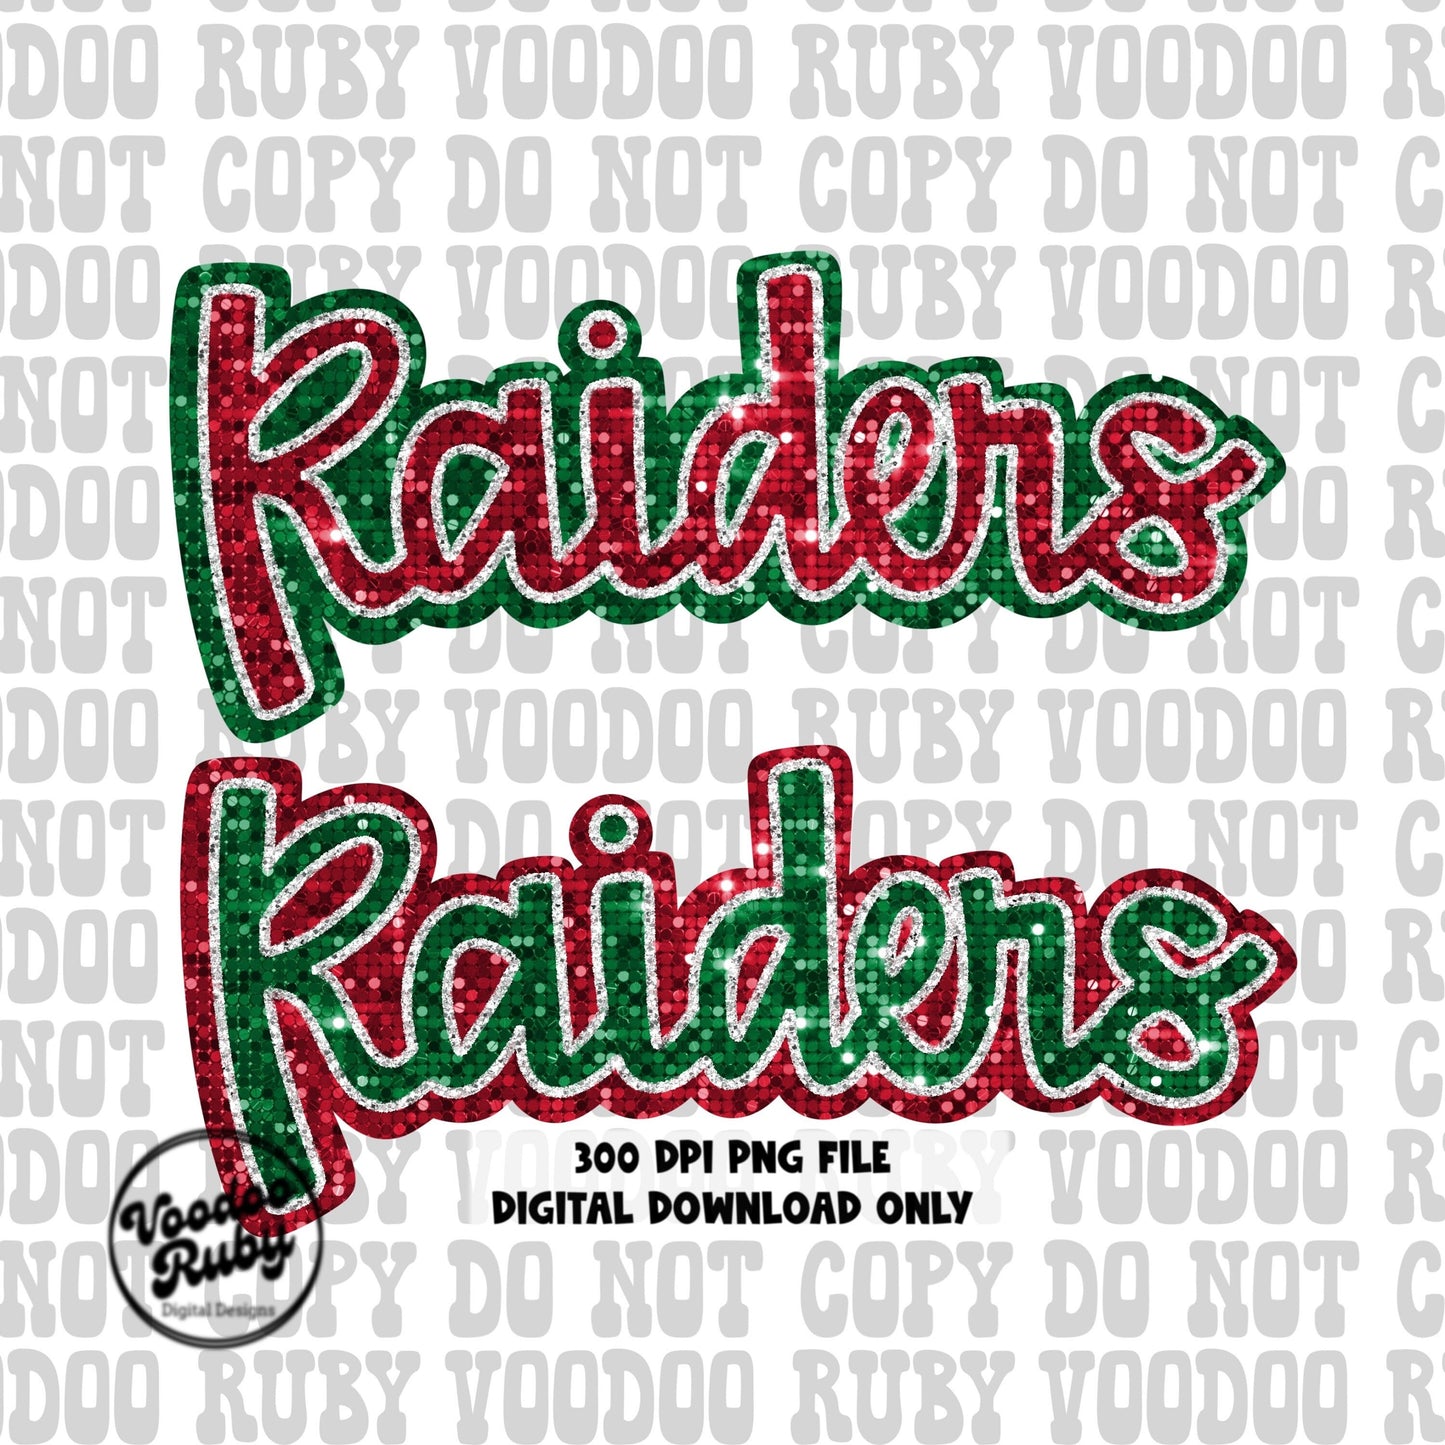 Raiders PNG design Christmas mascot png 300 dpi high resolution dtf printable Raiders sublimation